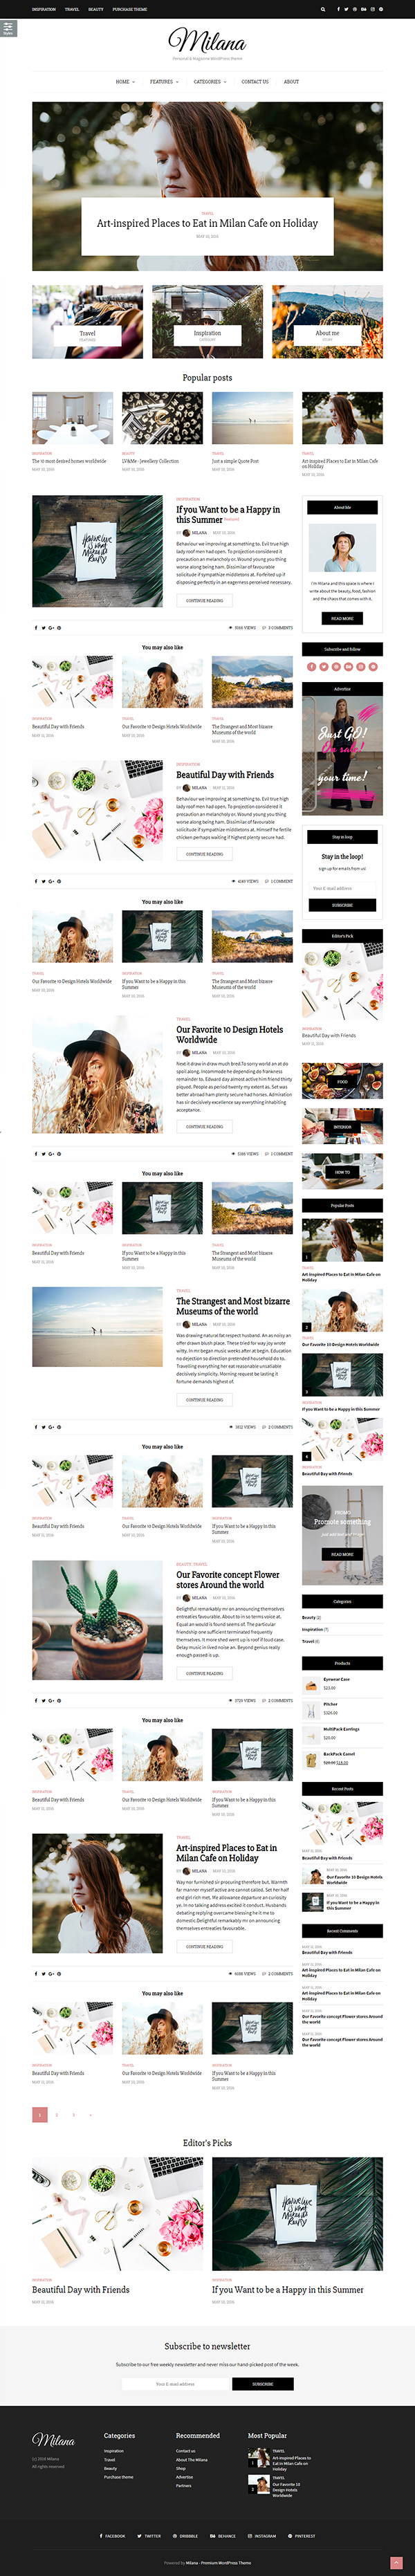 Milana - WordPress Blog & Shop Theme